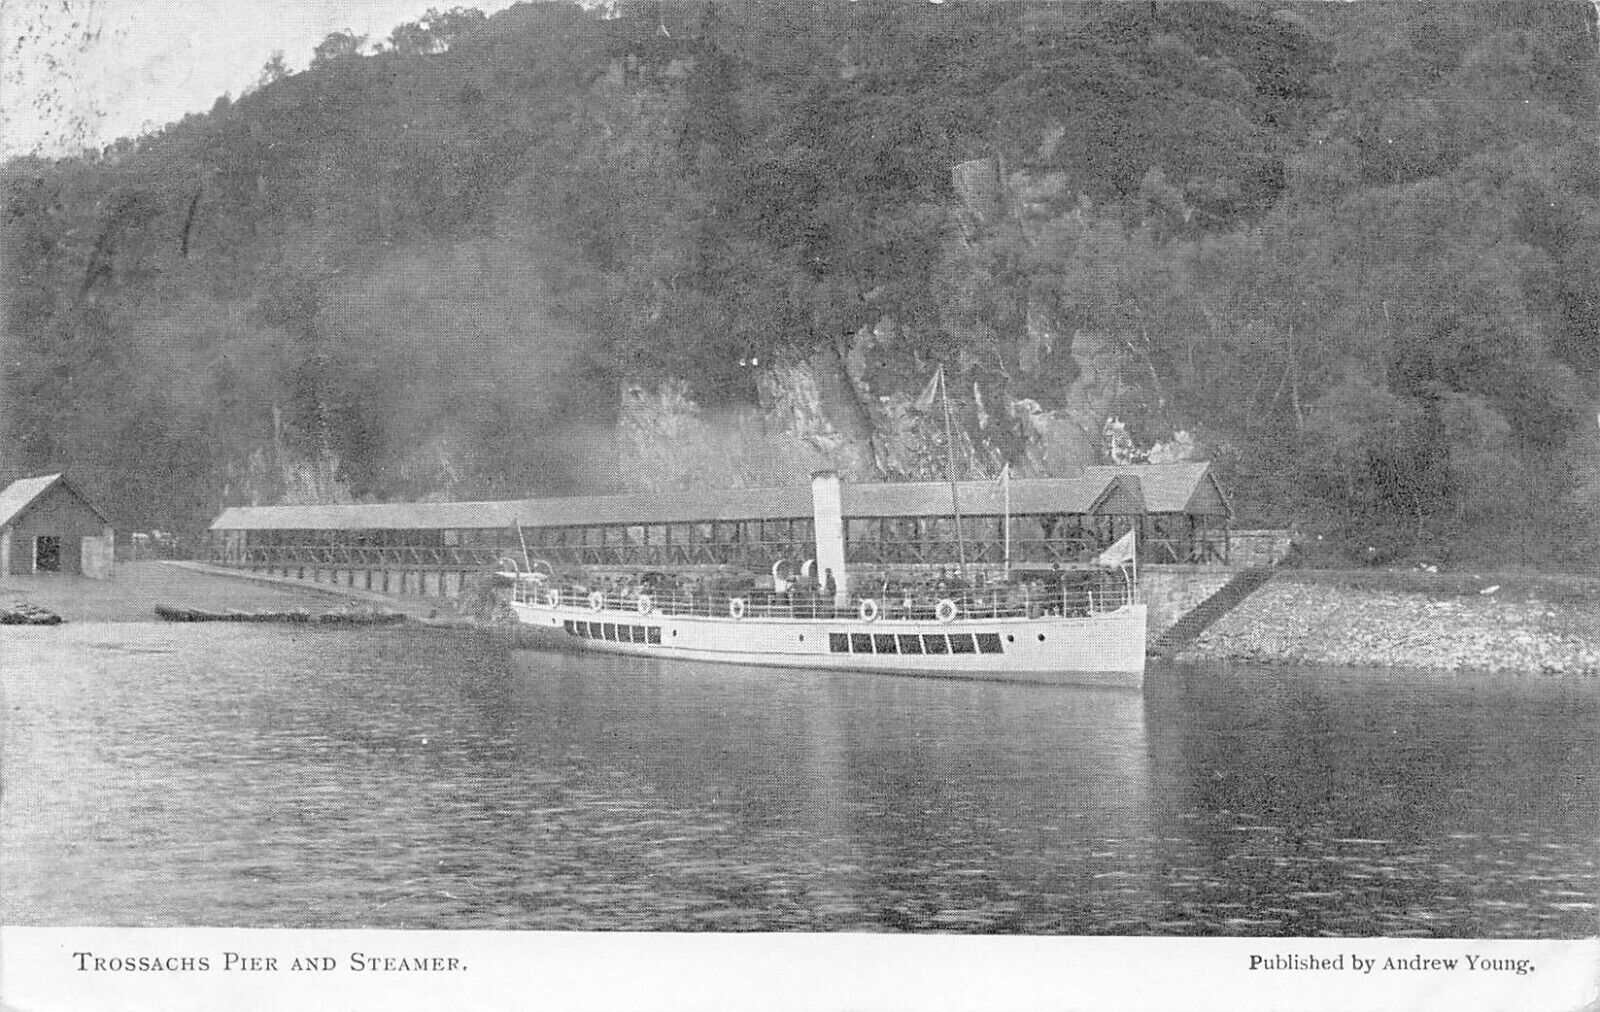 Trossachs Pier and Steamer, Trossachs, Scotland, 1905 postcard, used 